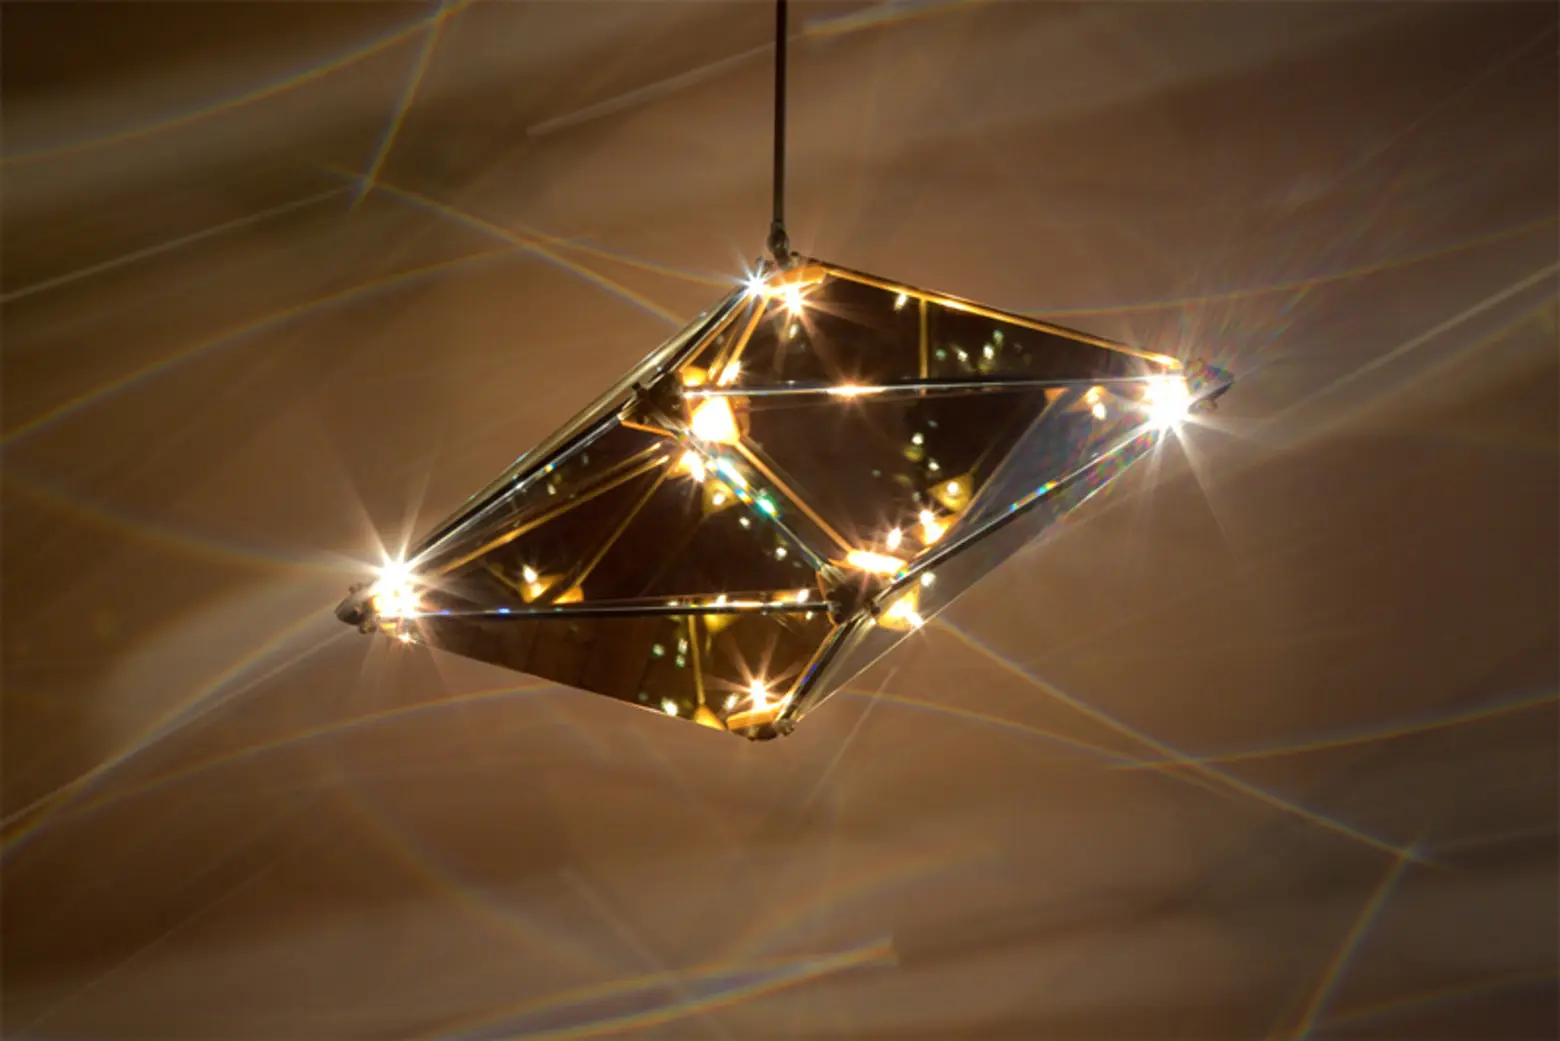 Bec Brittain’s Beautiful Maxhedron Pendant Lamp Creates Stunning Light Constellations